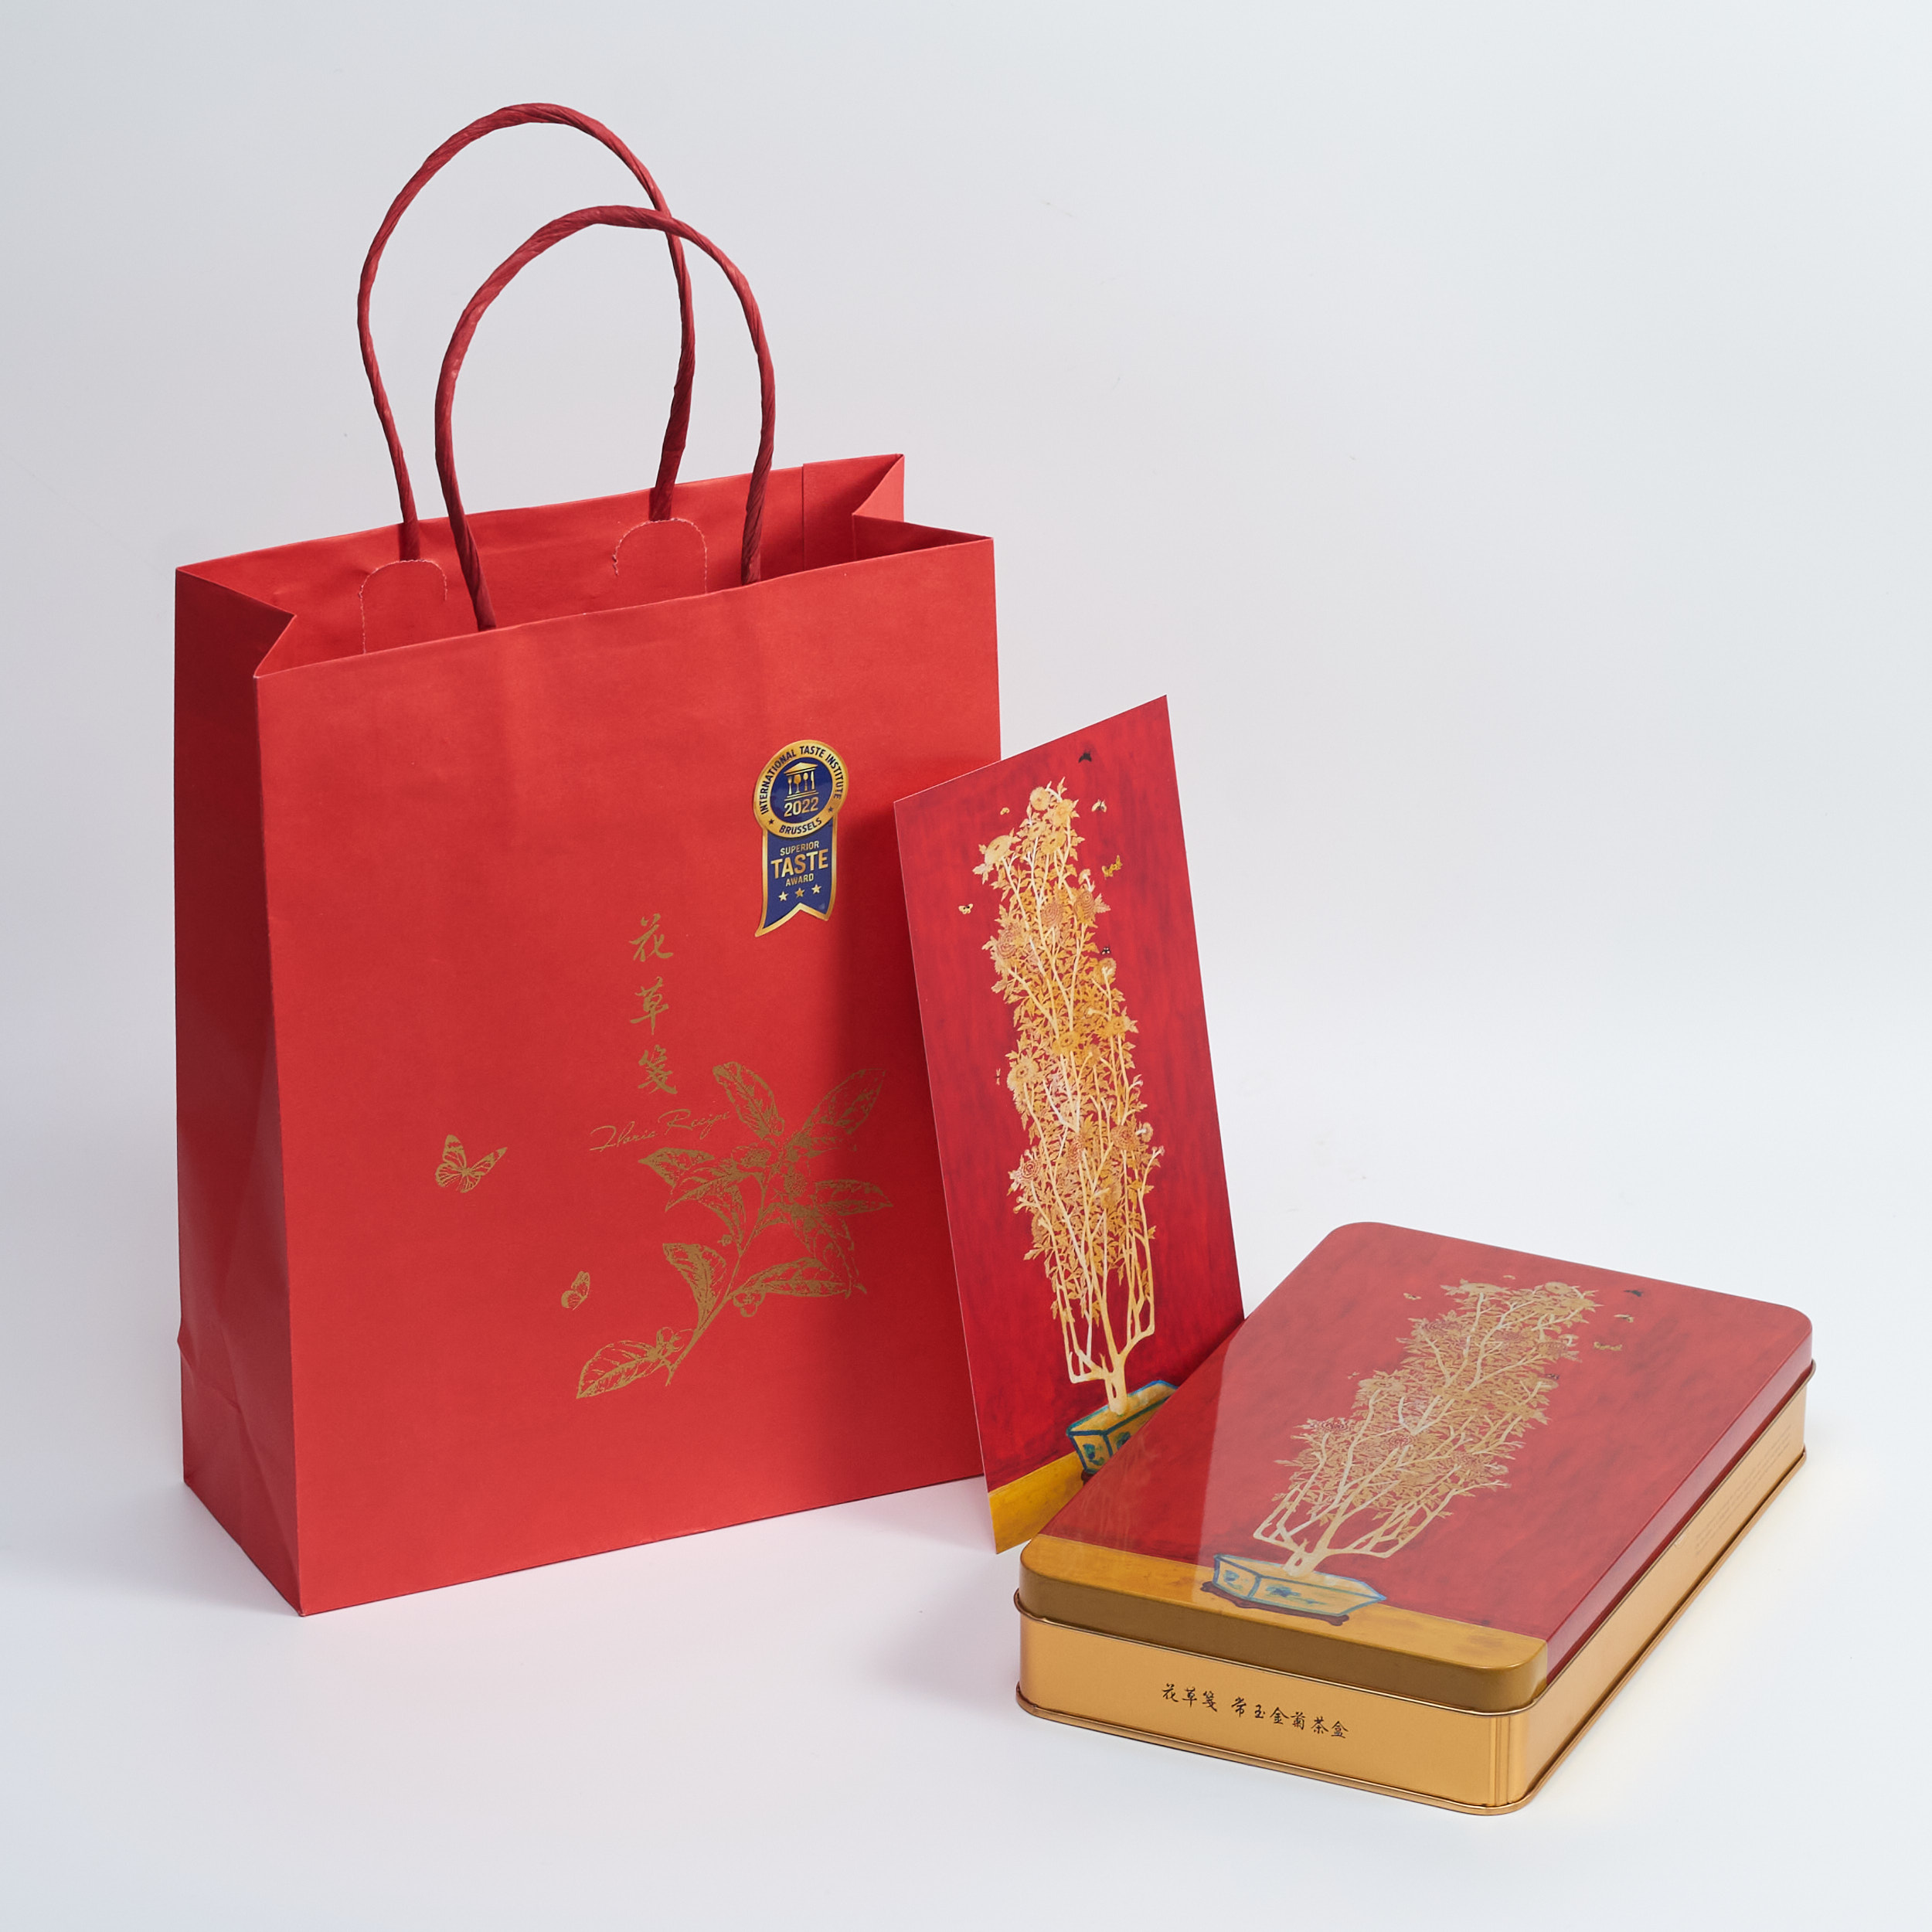  花草箋常玉金菊茶盒 Sanyu Chrysanthemum Tea Box with Lishan Oolong Black Tea